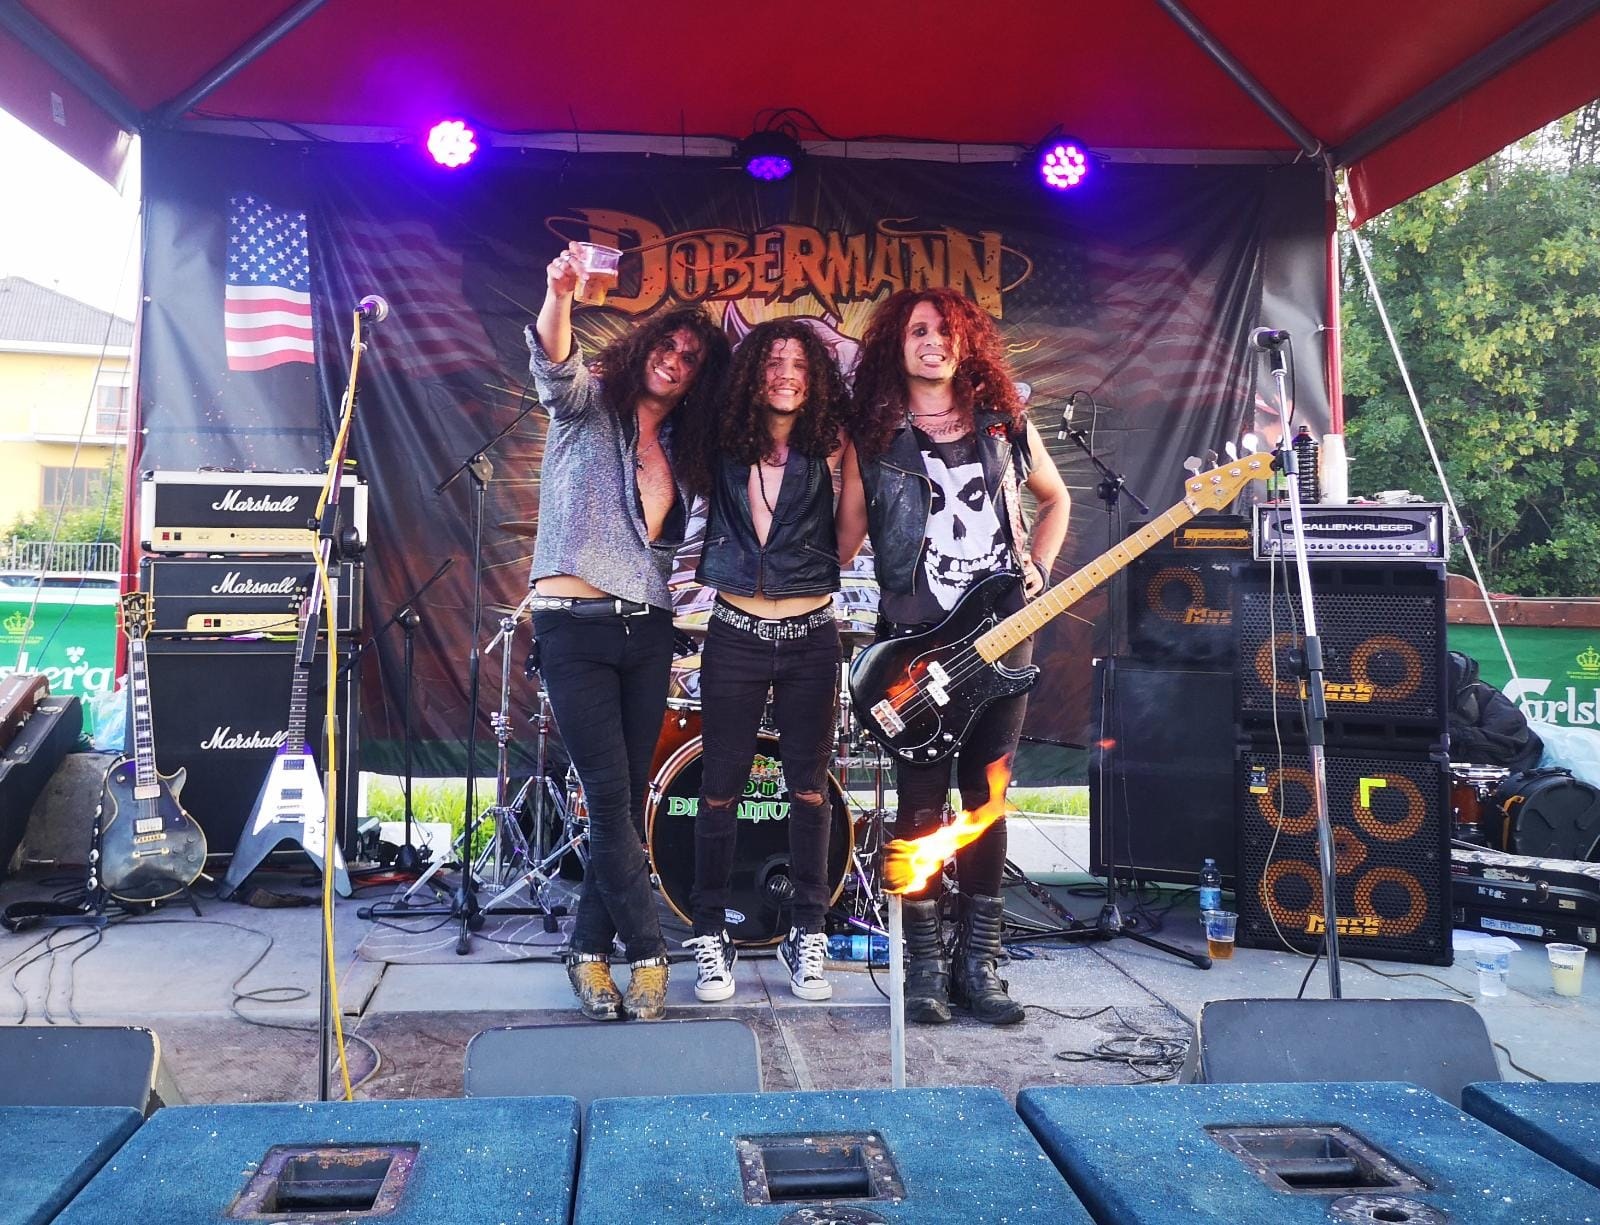 DOBERMANN – sul palco di Hard Rock Hell 2022, insieme a The Darkness, Skid Row e Ugly Kid Joe